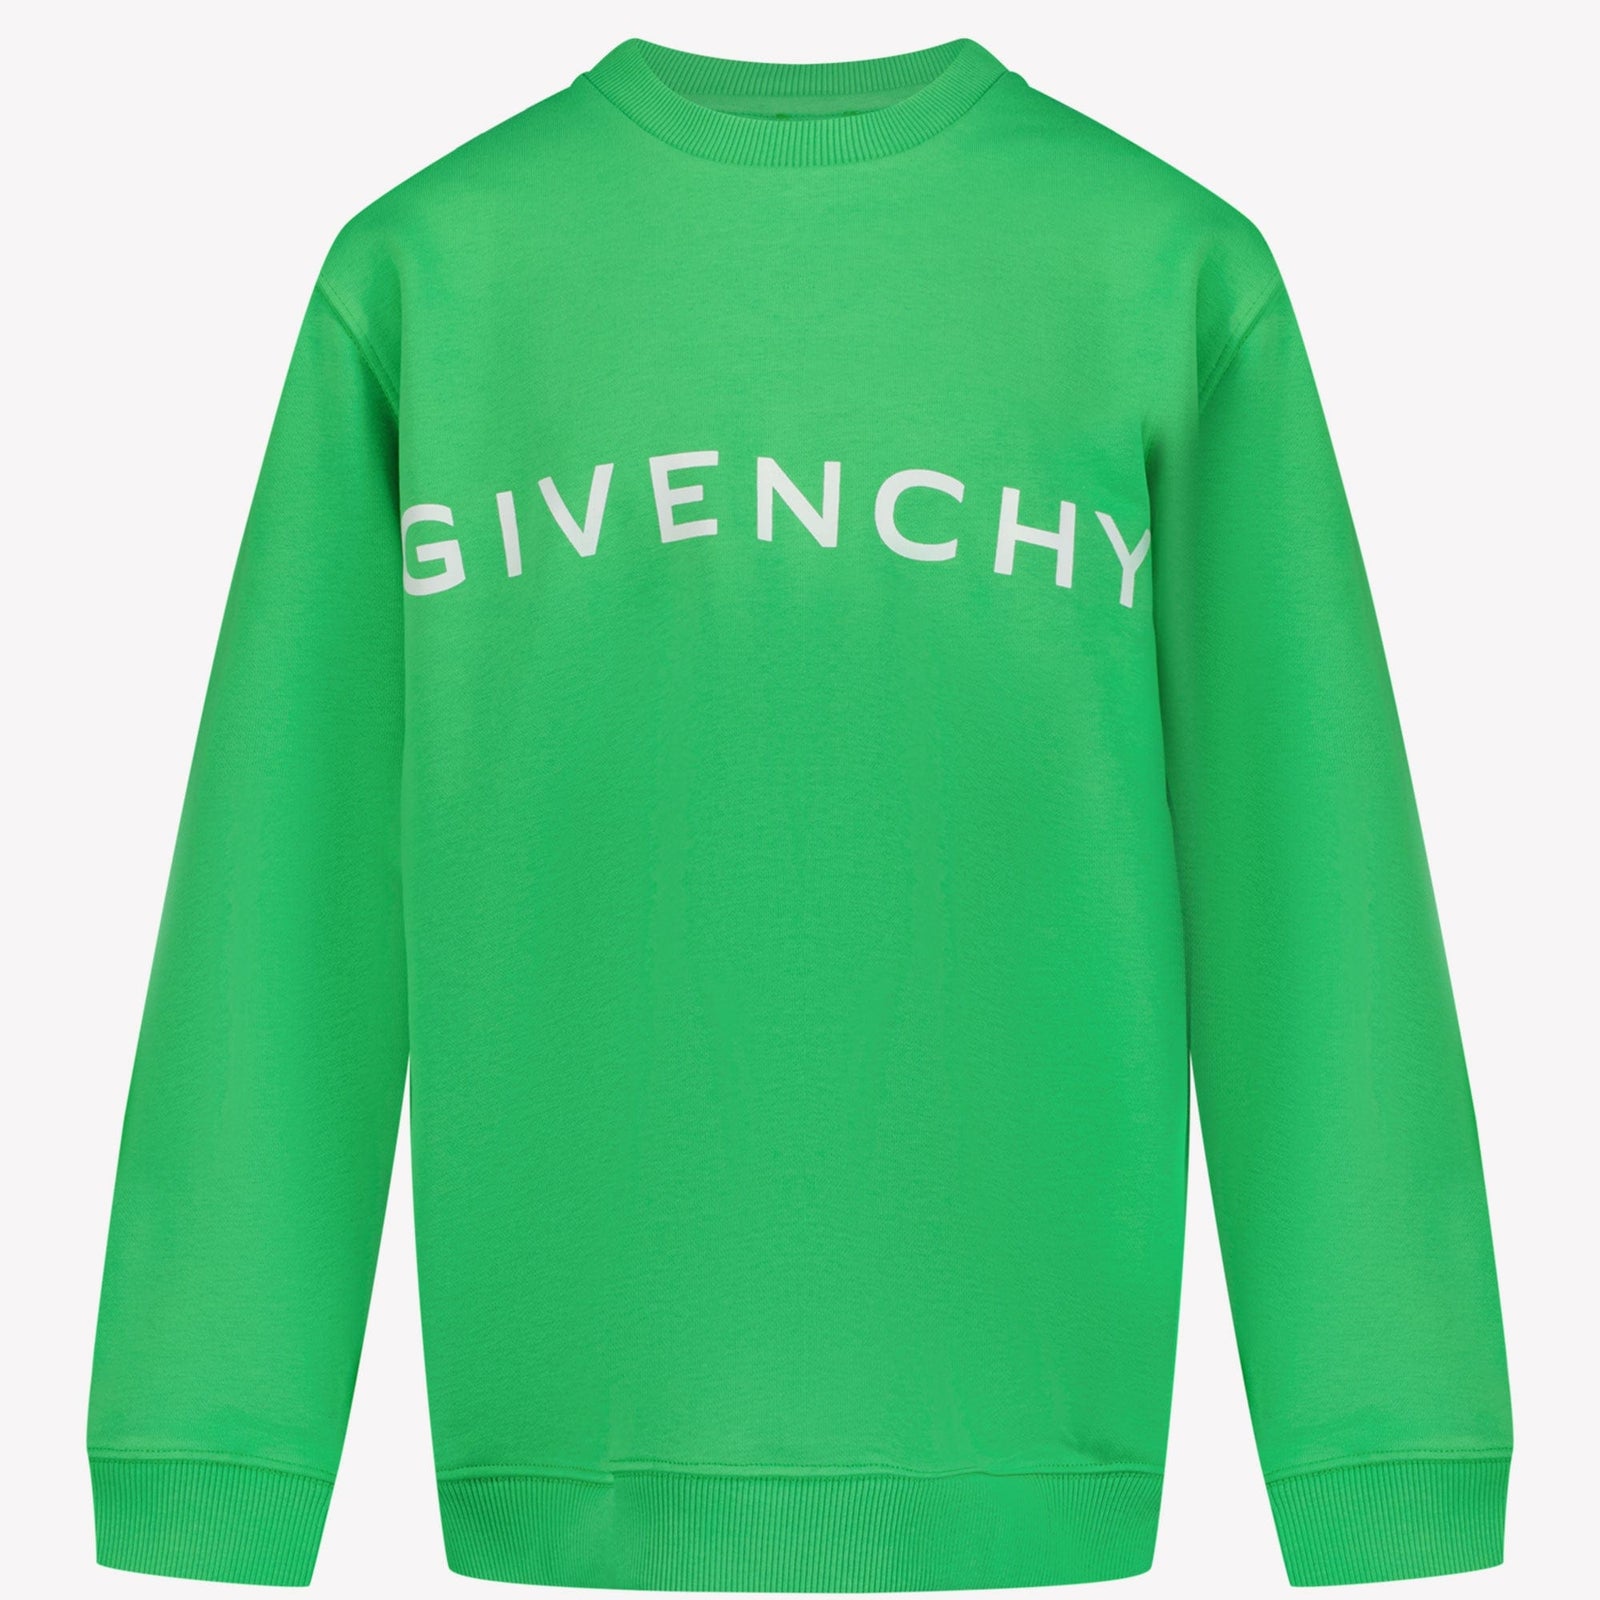 Givenchy Kinder Jongens Trui Groen 4Y